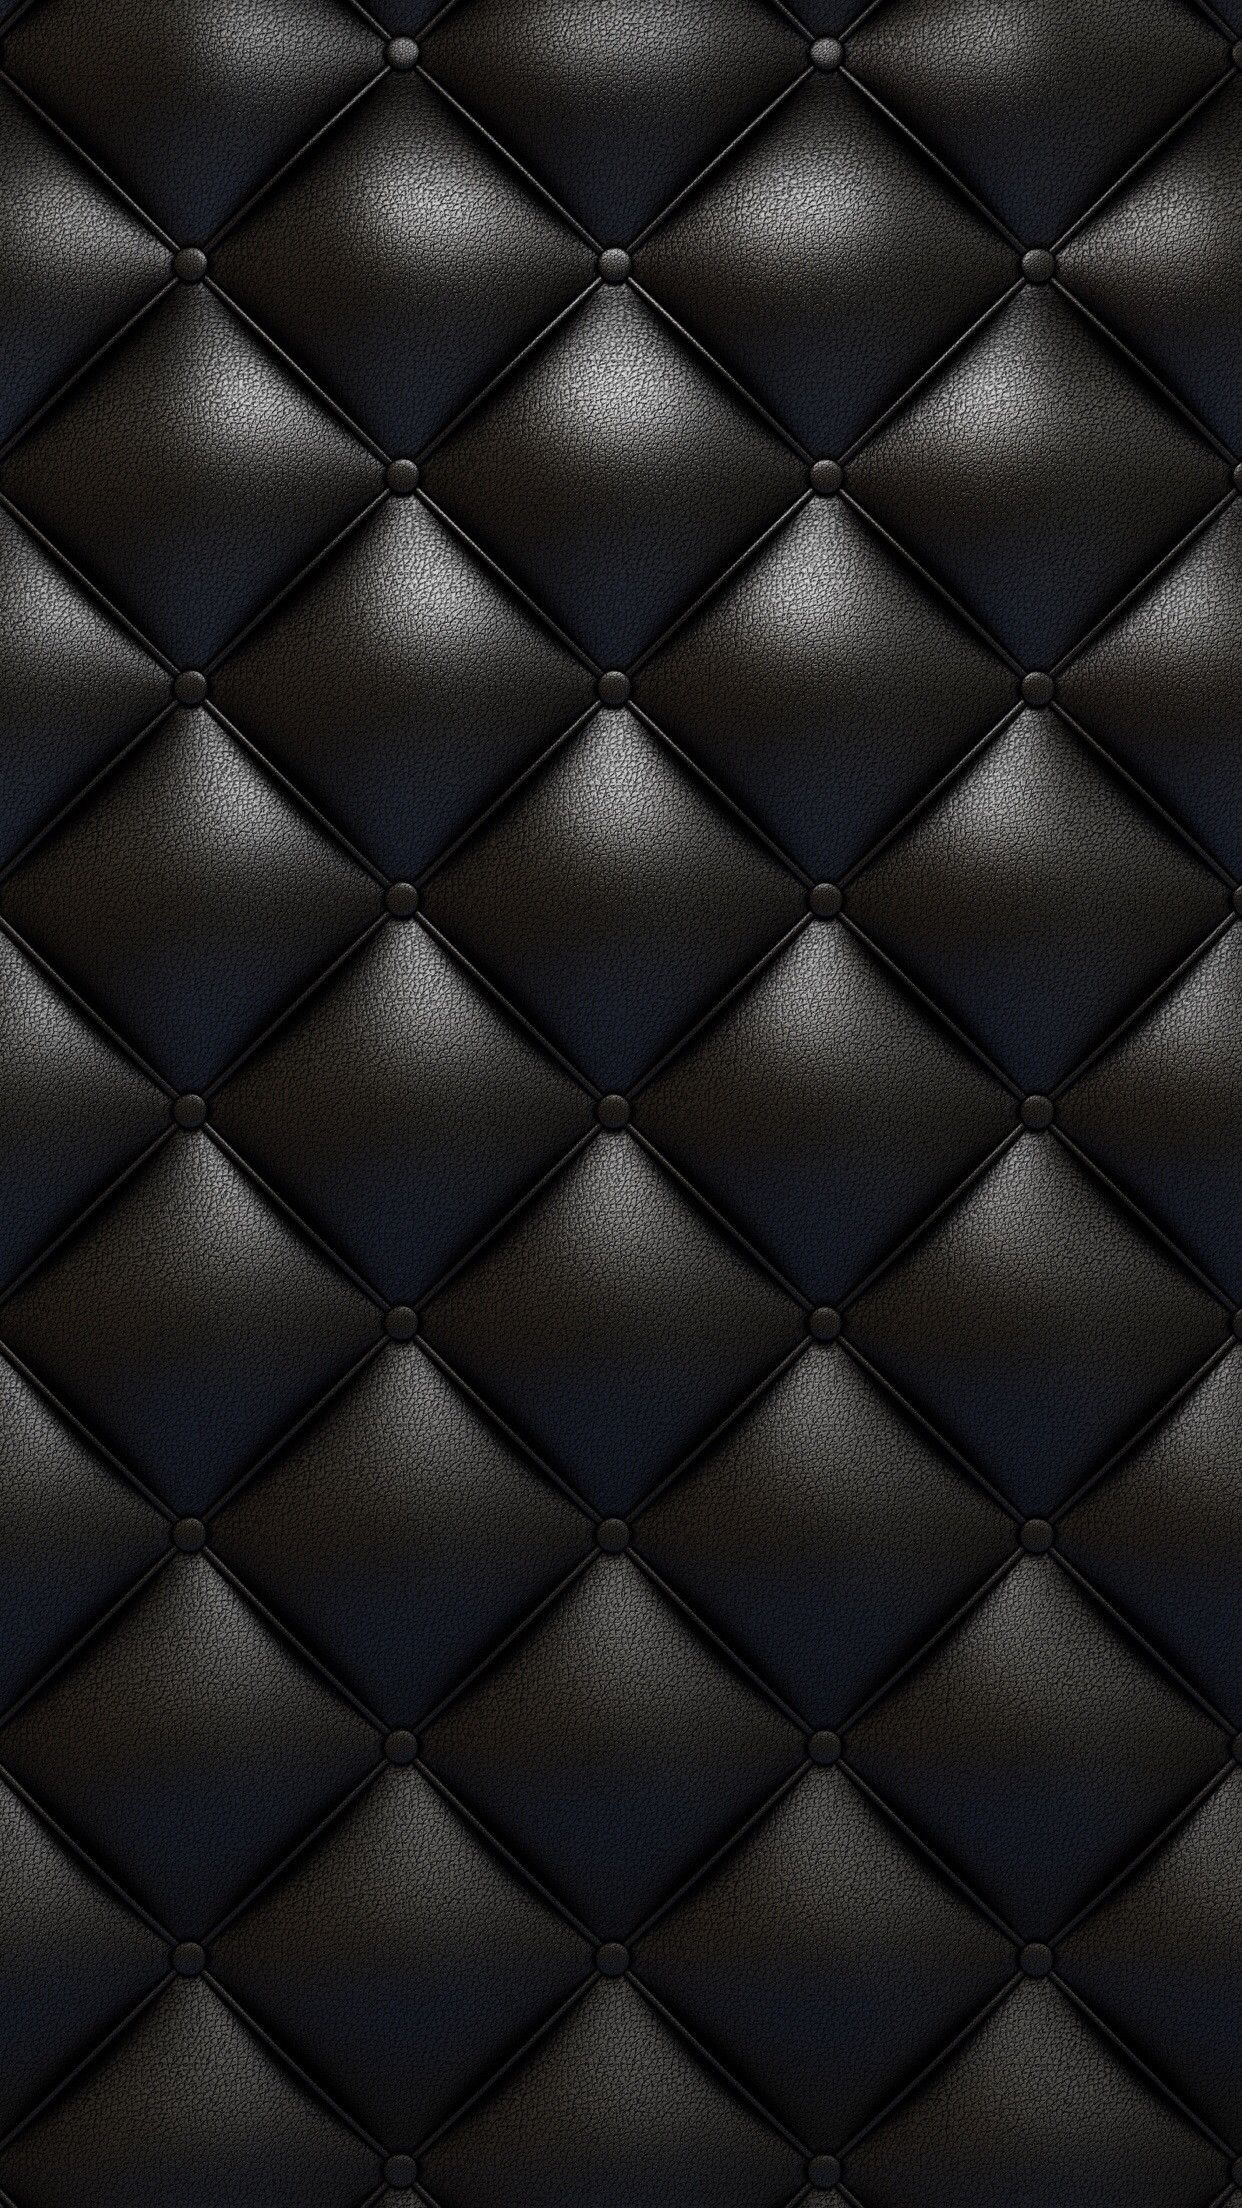 lv wallpaper,black,pattern,grey,design,metal (#96346) - WallpaperUse